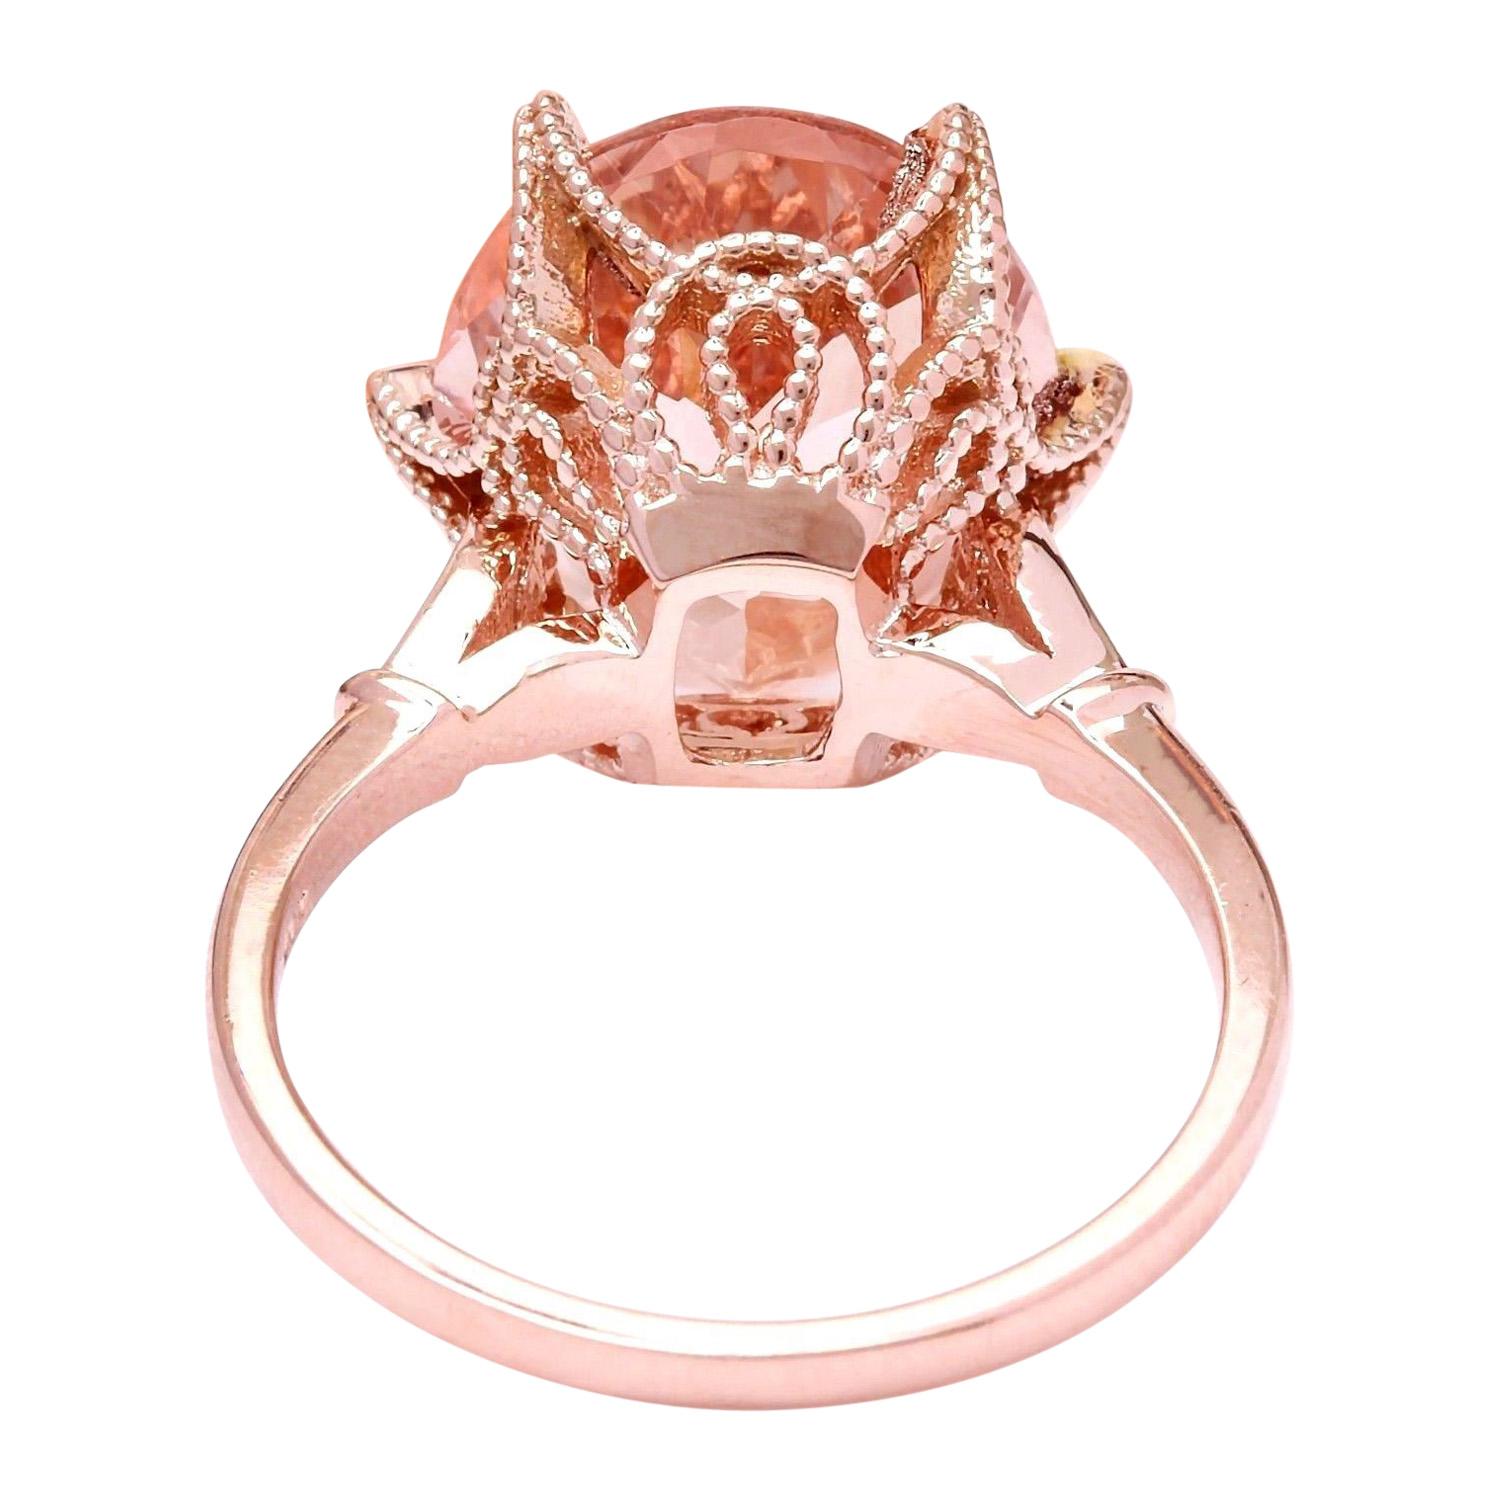 Oval Cut 6.25 Carat Natural Morganite 14 Karat Solid Rose Gold Diamond Ring For Sale